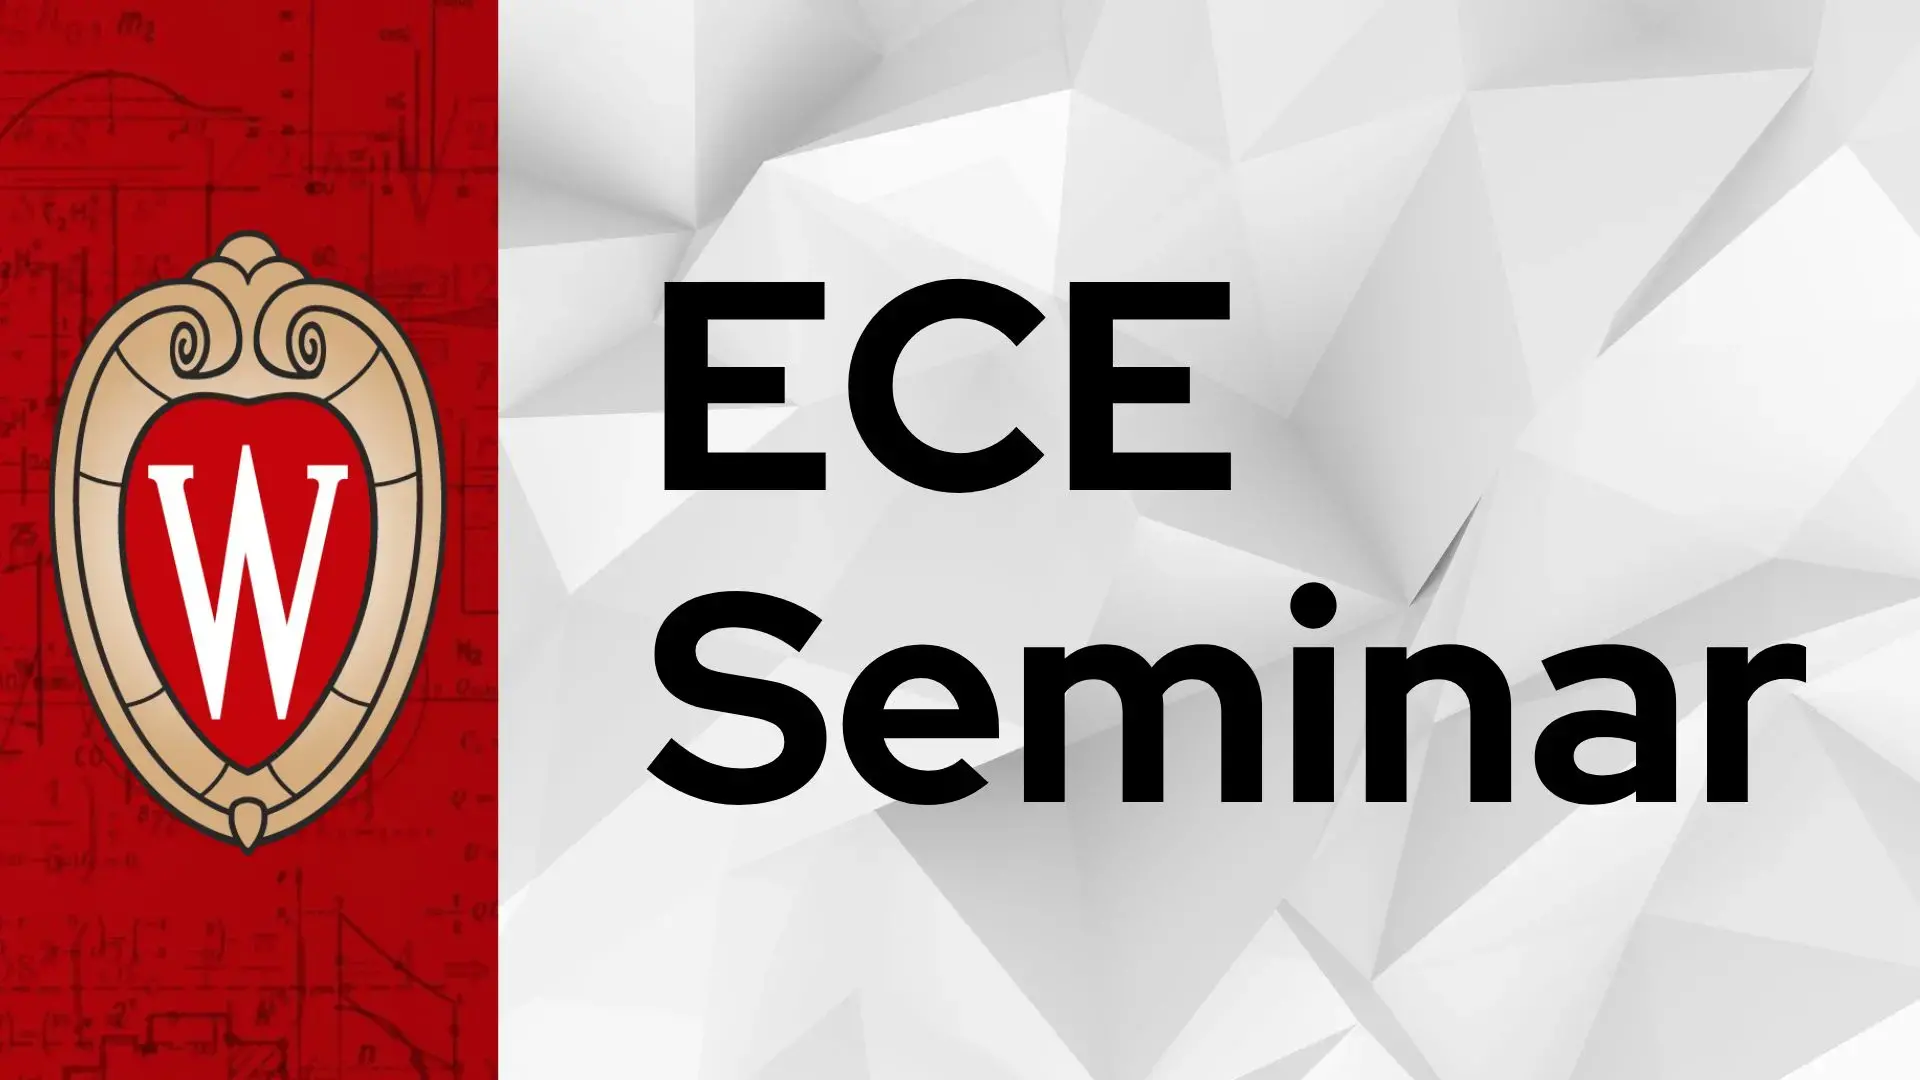 ECE Seminar